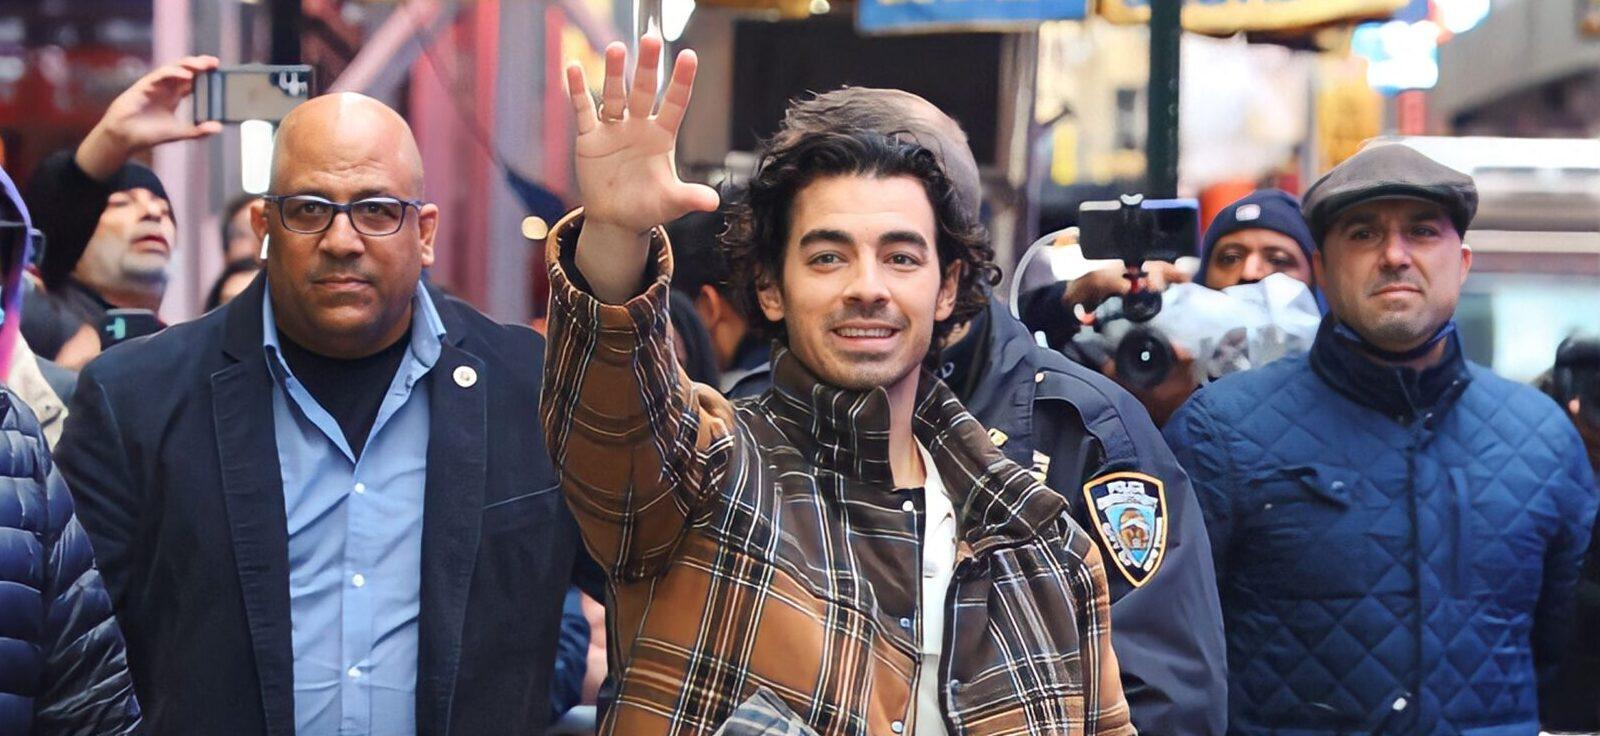 Singer Joe Jonas seen leaving Good Morning America